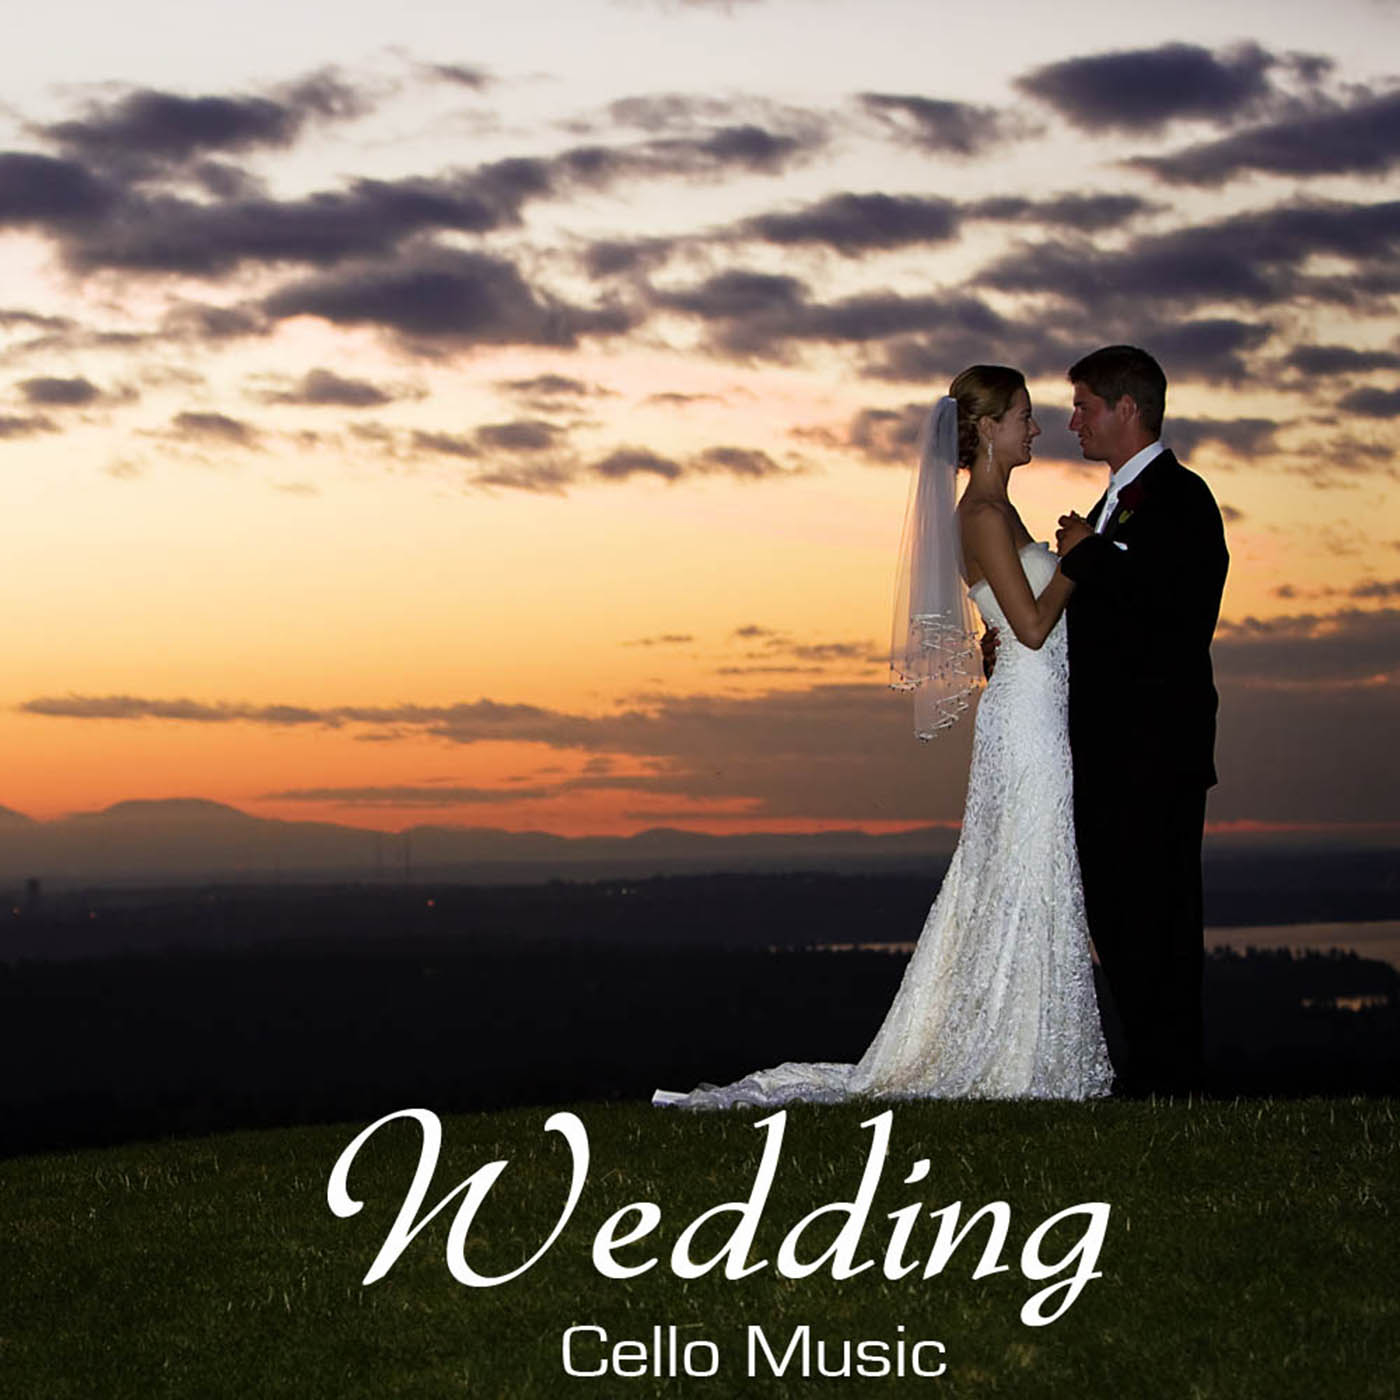 Wedding Cello Music: Wedding Music with Traditional Irish, Scottish and English Instrumental Songs, Wedding Reception Music and Wedding Dinner Party Happy Songs